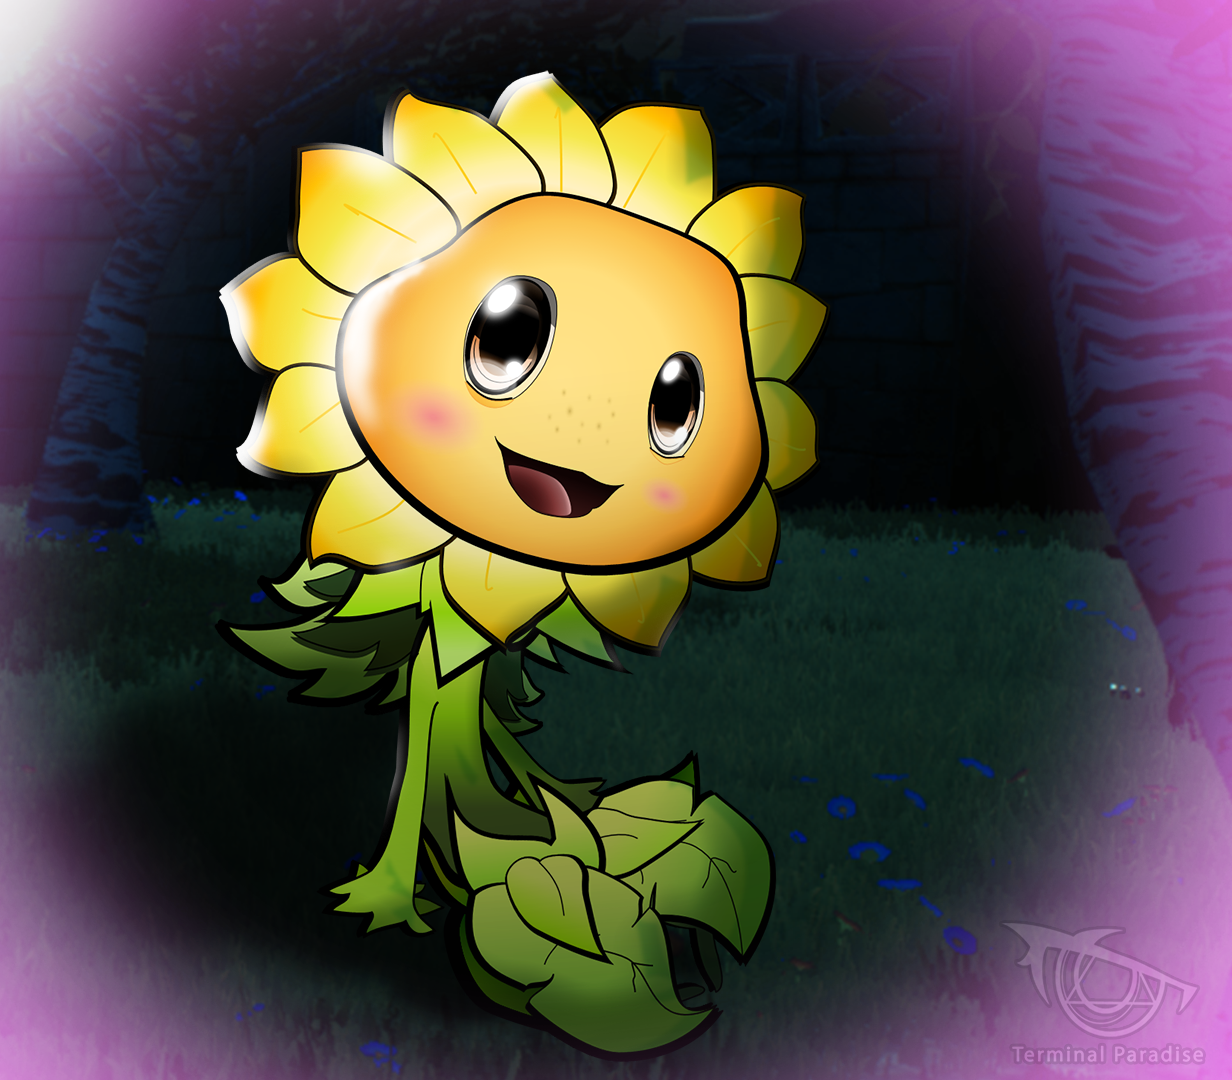 Pvz Sunflower Fan Art free images, download Pvz Sunflower Fan Art,Prime Sun...